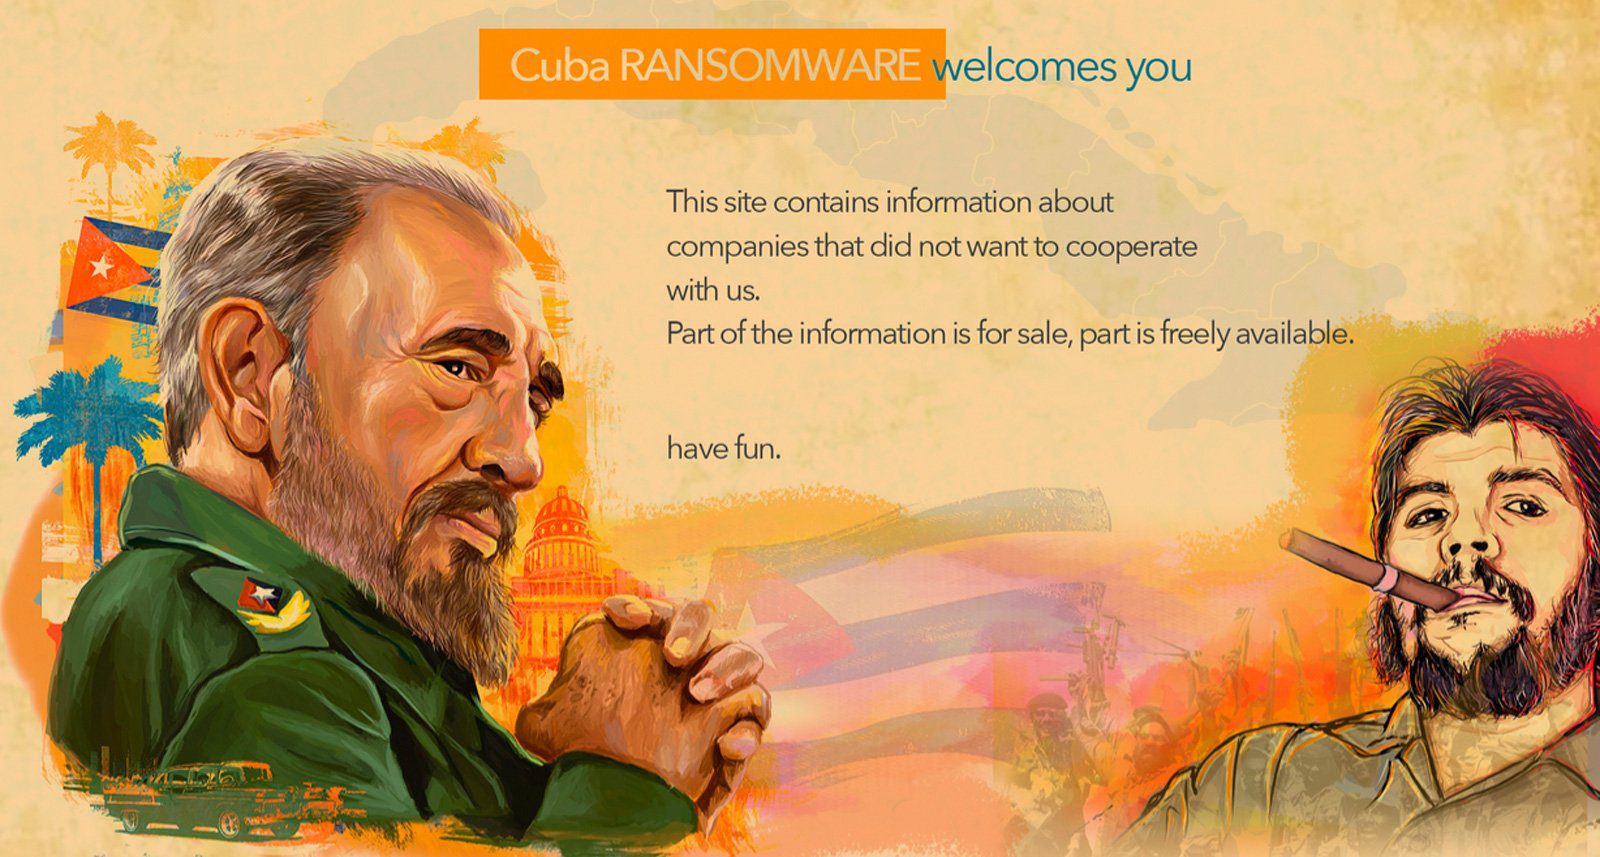 Hacker uses new RAT malware in Cuba Ransomware attacks